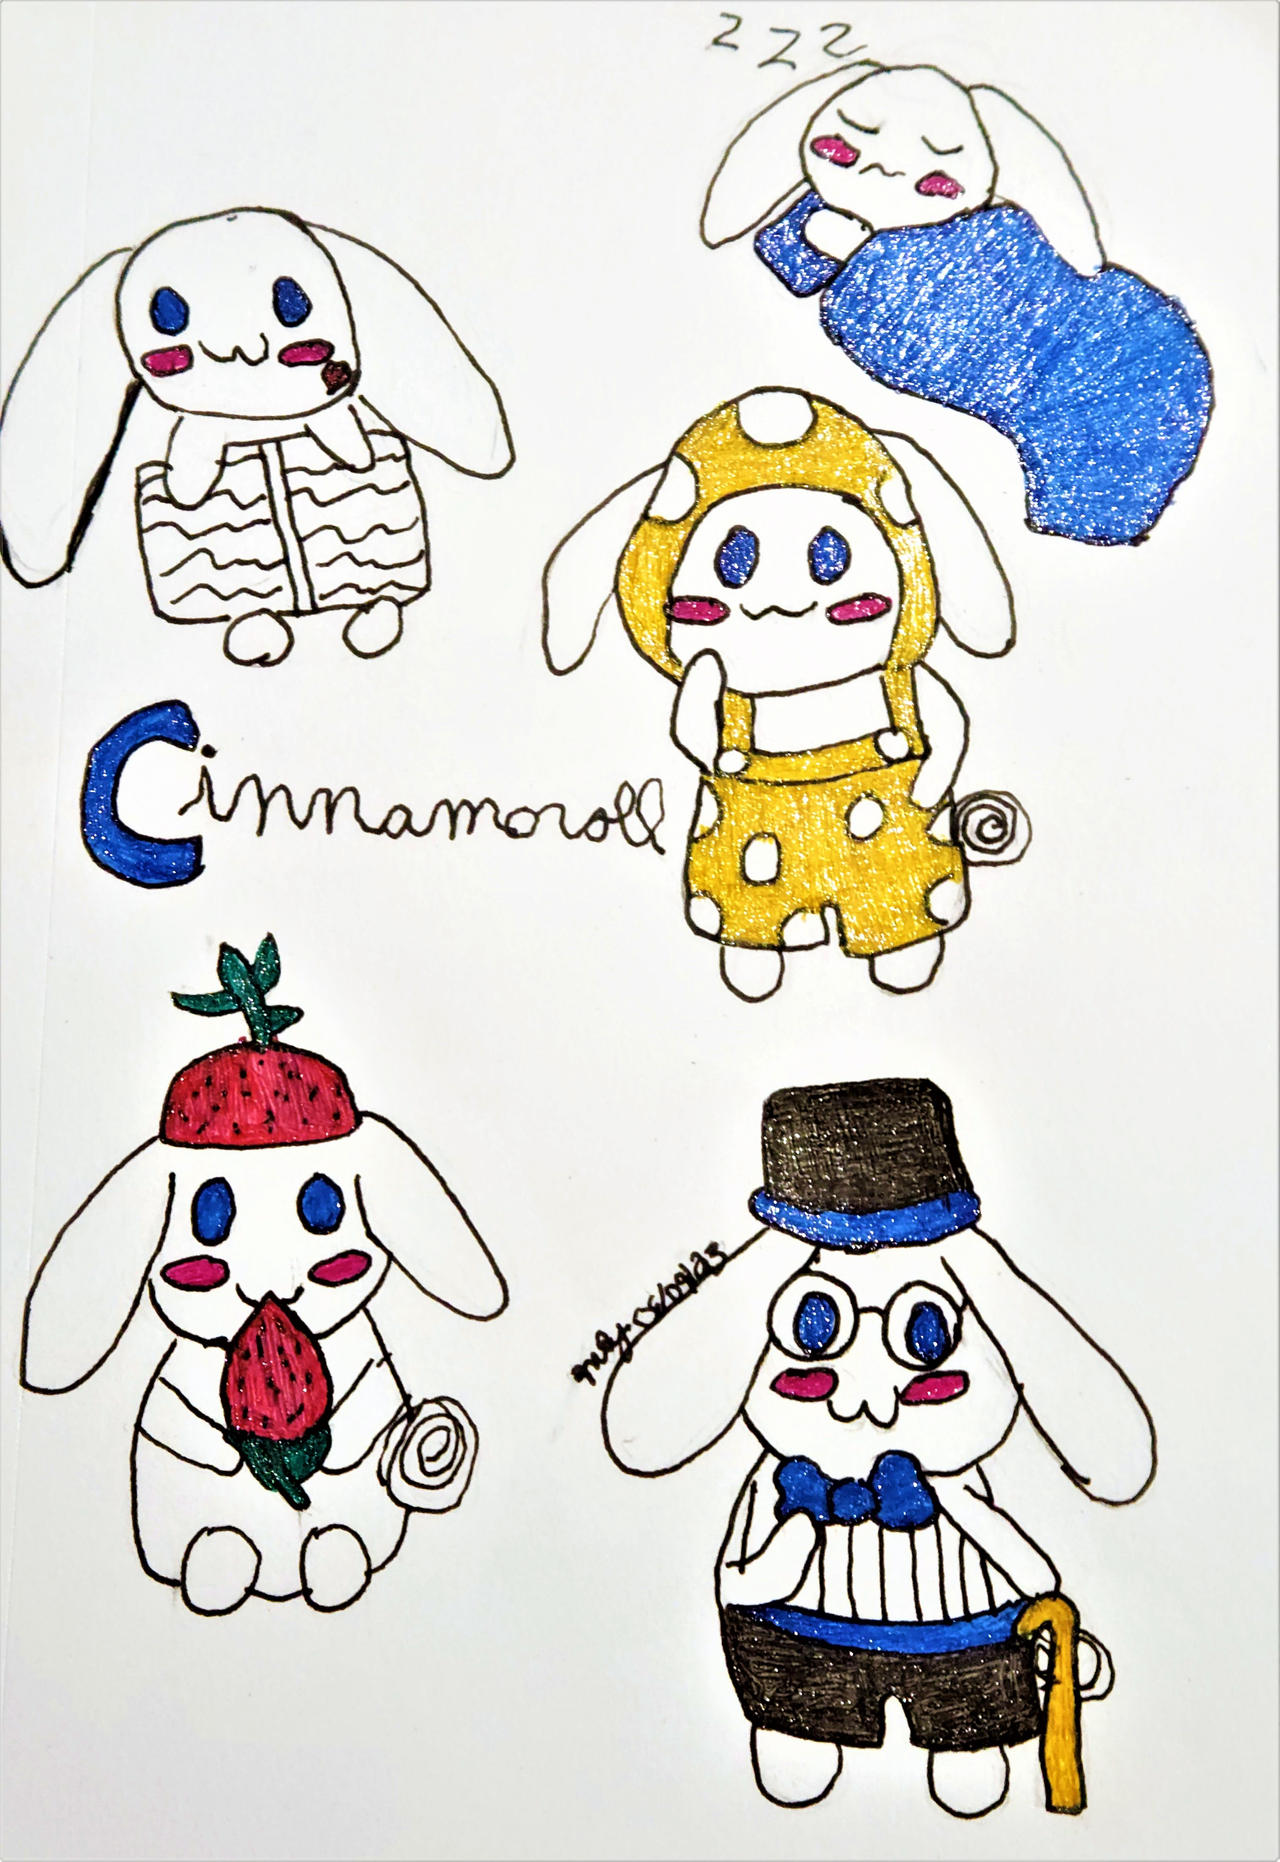 Sanrio Characters by Panda0-0 on DeviantArt